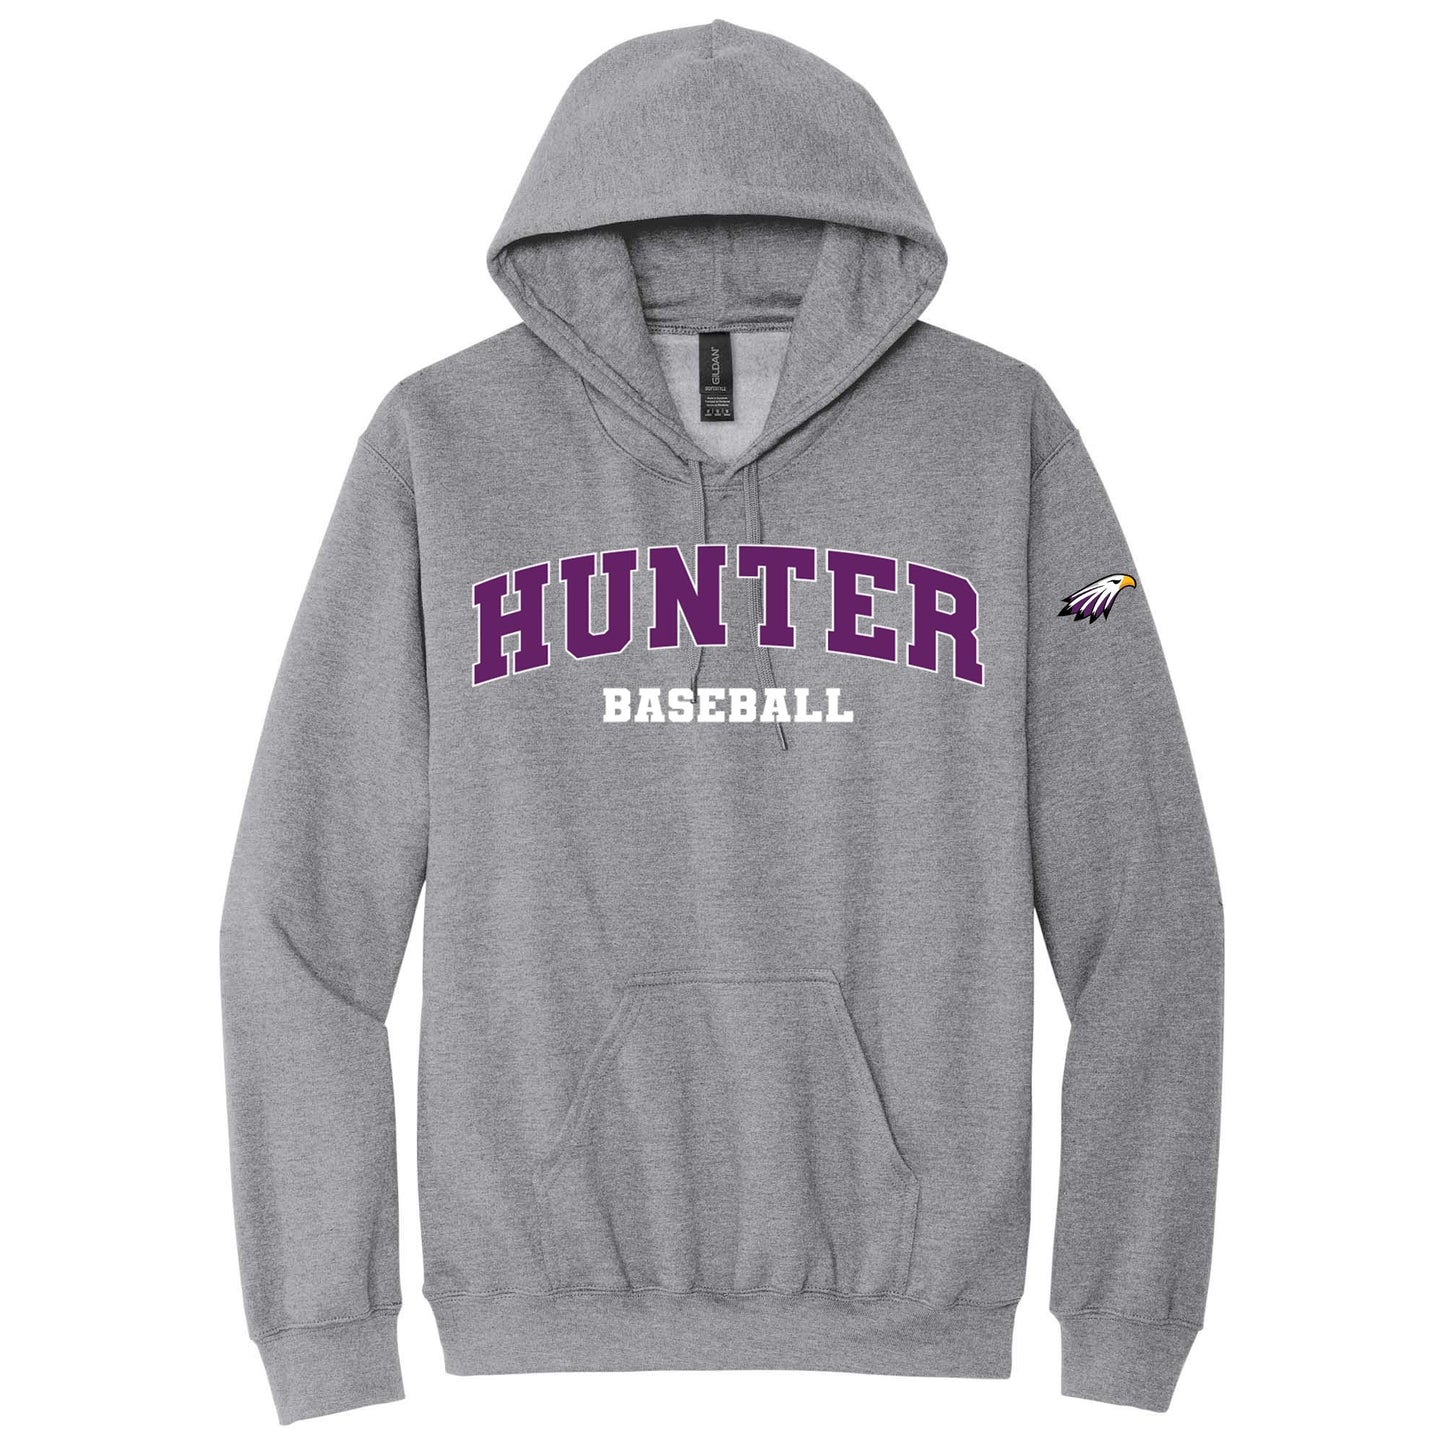 Hunter Baseball Pullover Hoodies